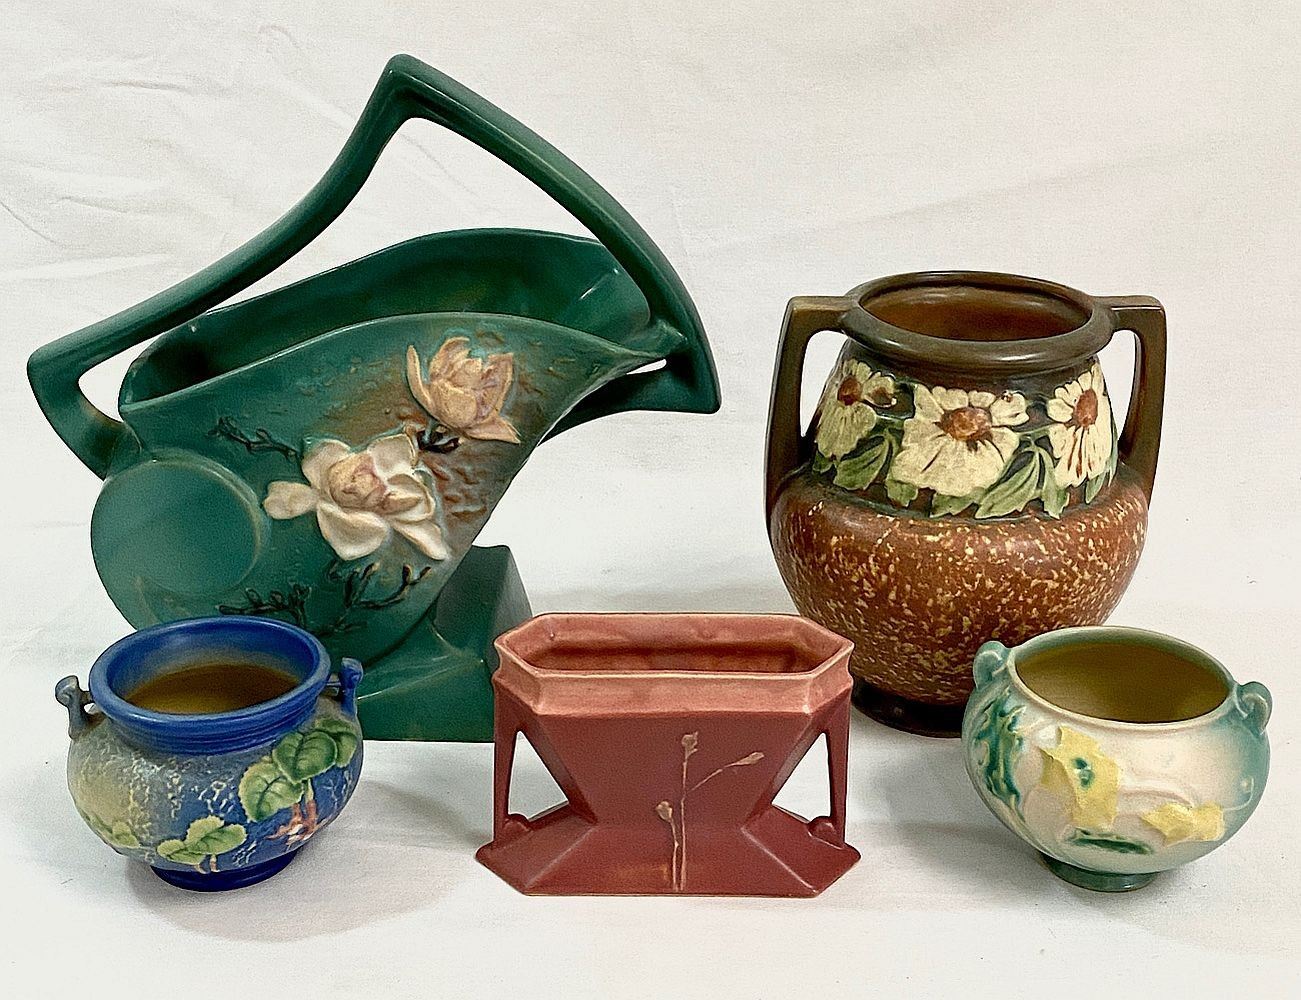 Collection of Roseville Pottery Incl. "Futura", "Dahlrose", "Poppy", "Fuchsia", "Magnolia"